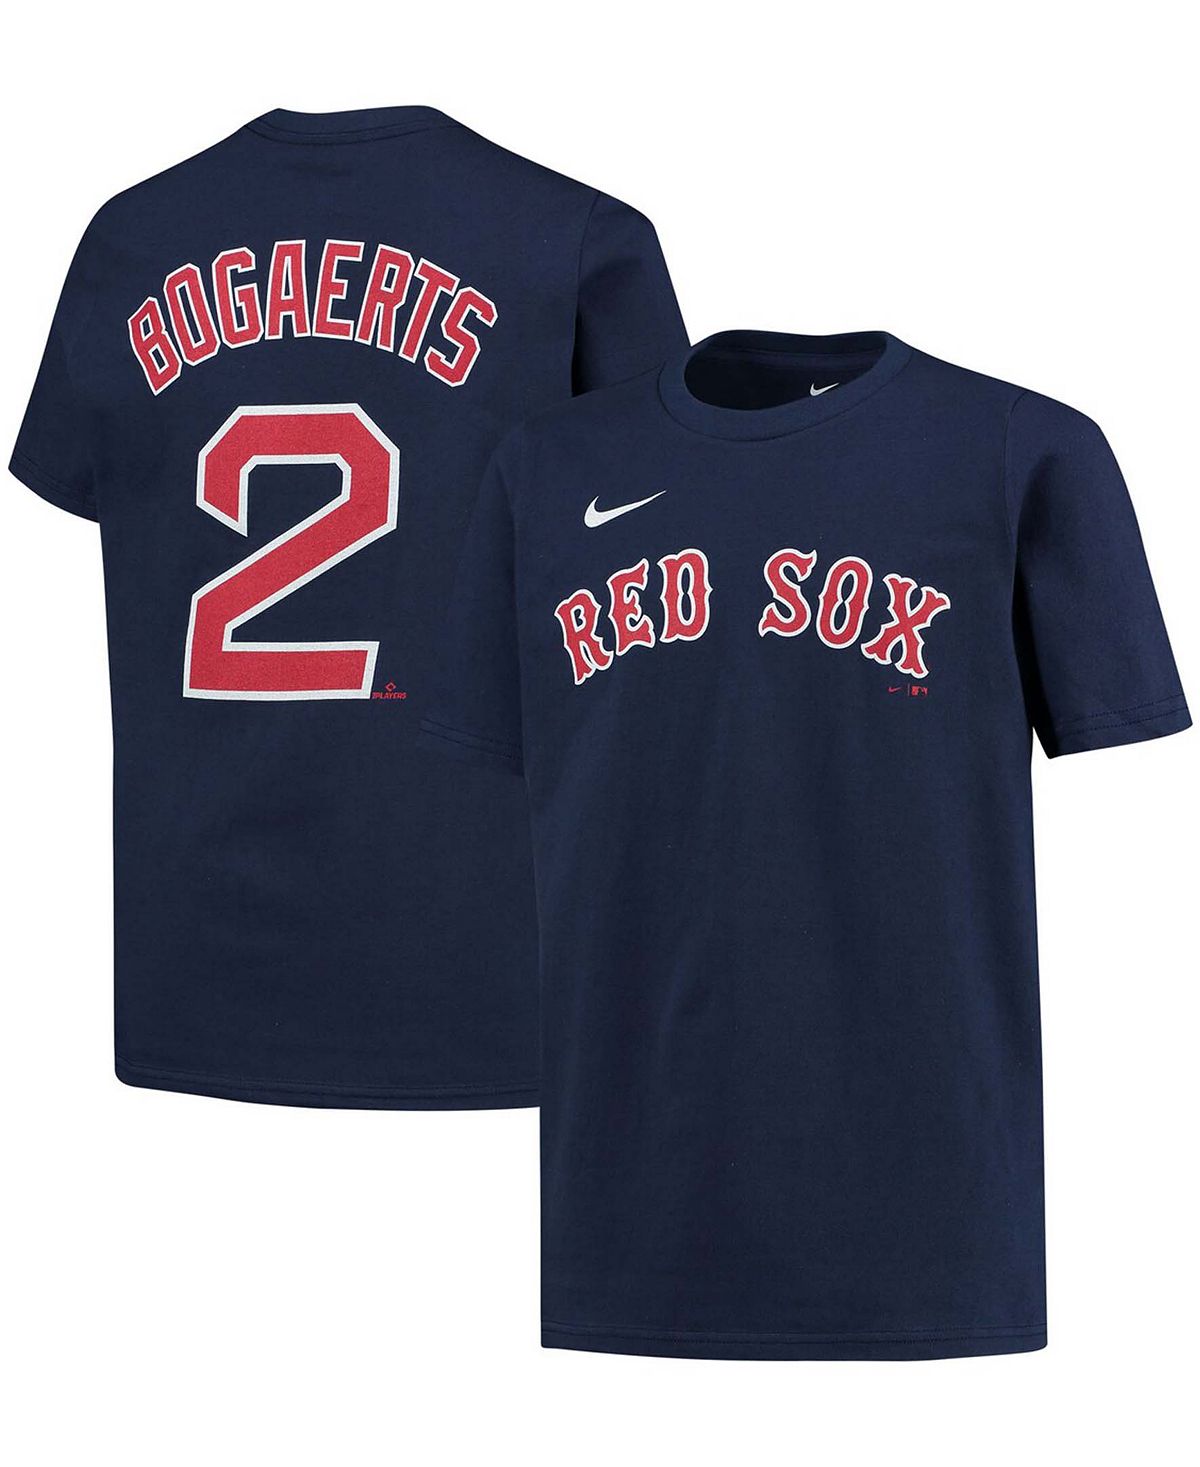 Темно-синяя футболка Big Boys Xander Bogaerts Boston Red Sox с именем и номером игрока Nike фигурка funko pop сандер богартс xander bogaerts игрок бейсбольной команды red sox